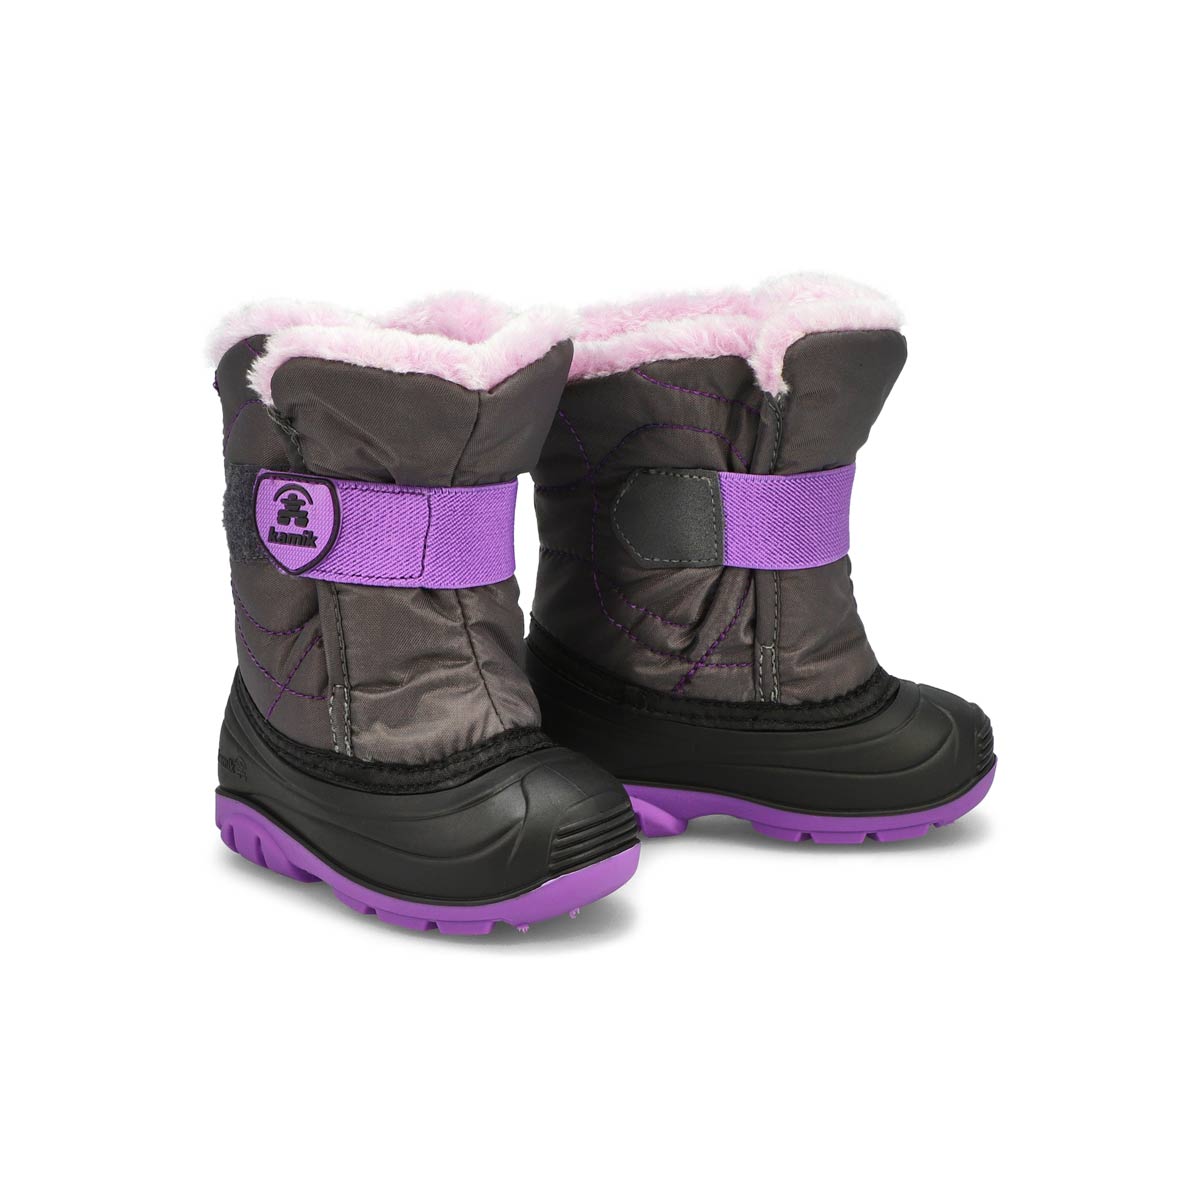 Infs-g SnowbugF Waterproof Winter Boot-Char/Orch